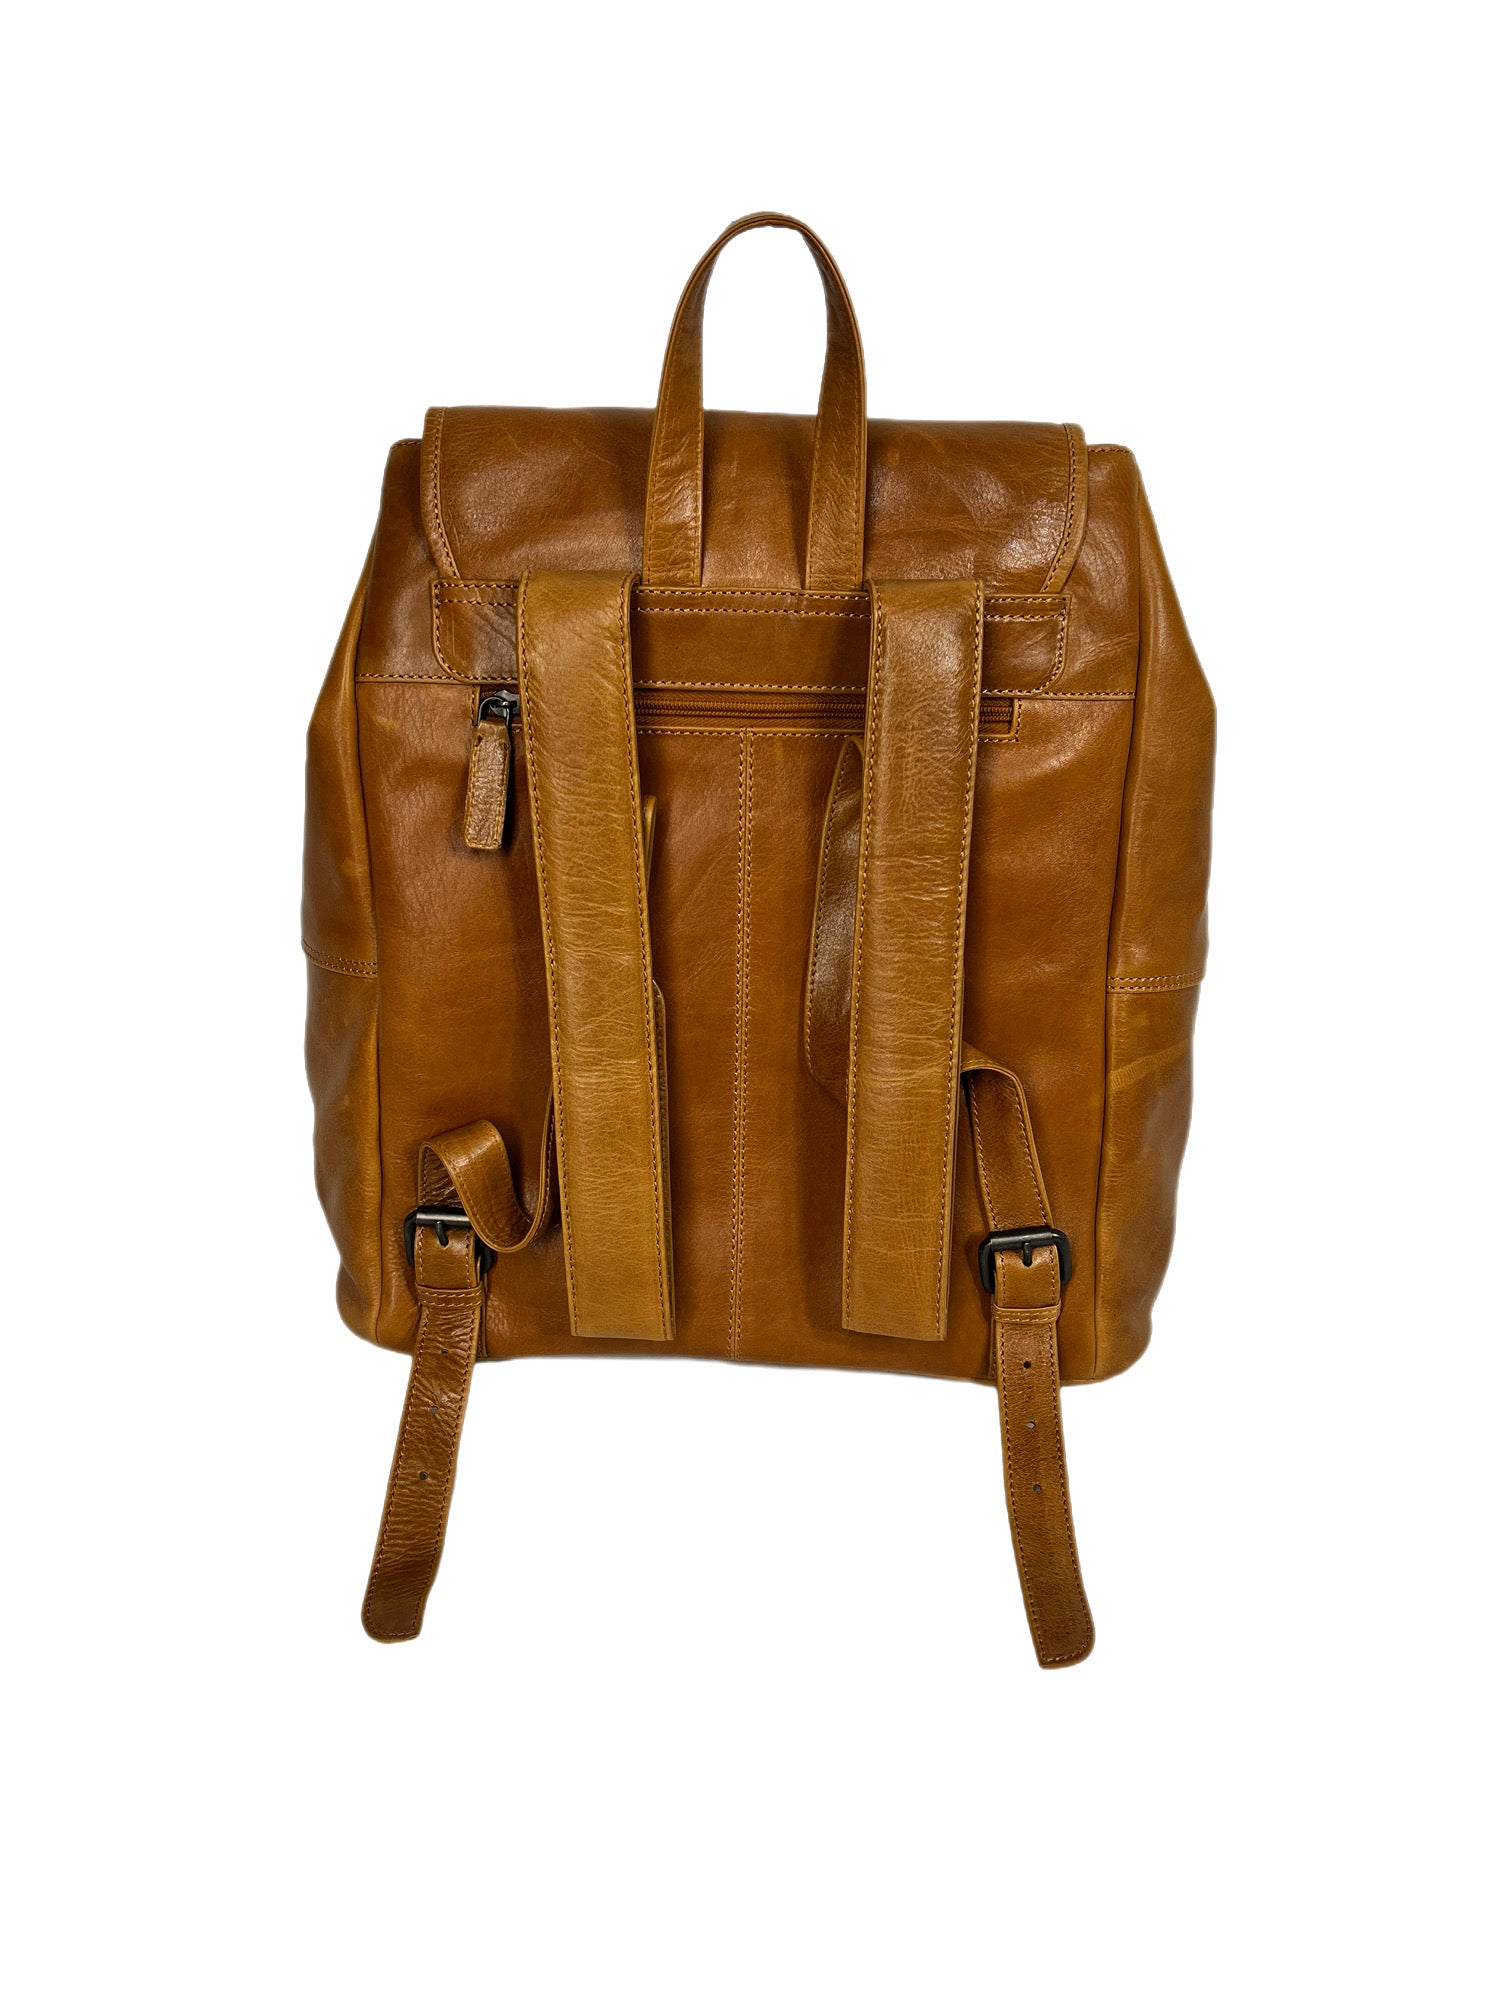 Vanguard Leather Rucksack - Prodigy Bag Company